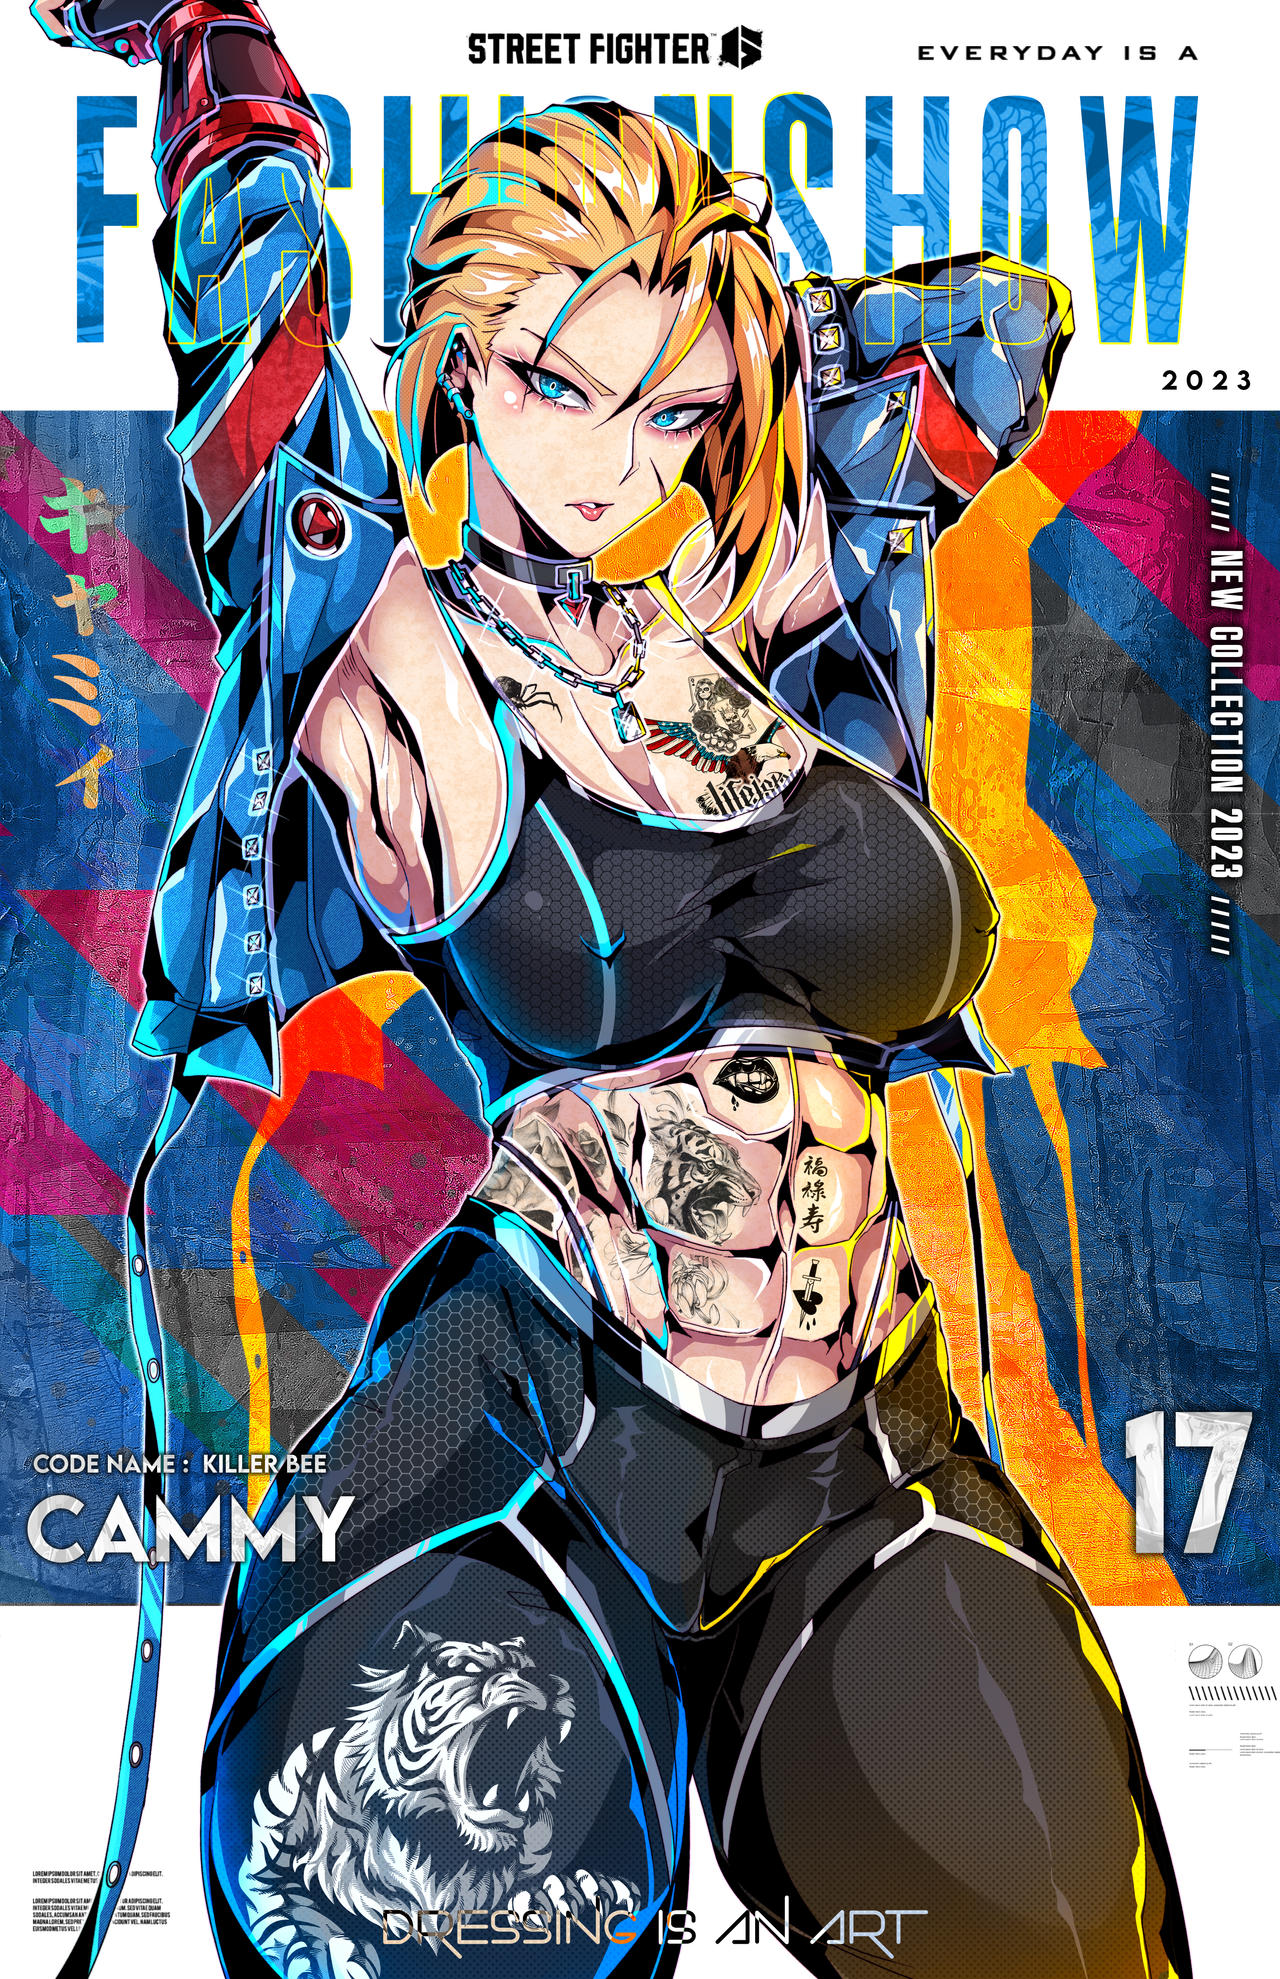 Cammy White (Street Fighter) FahdKhn88 - Illustrations ART street